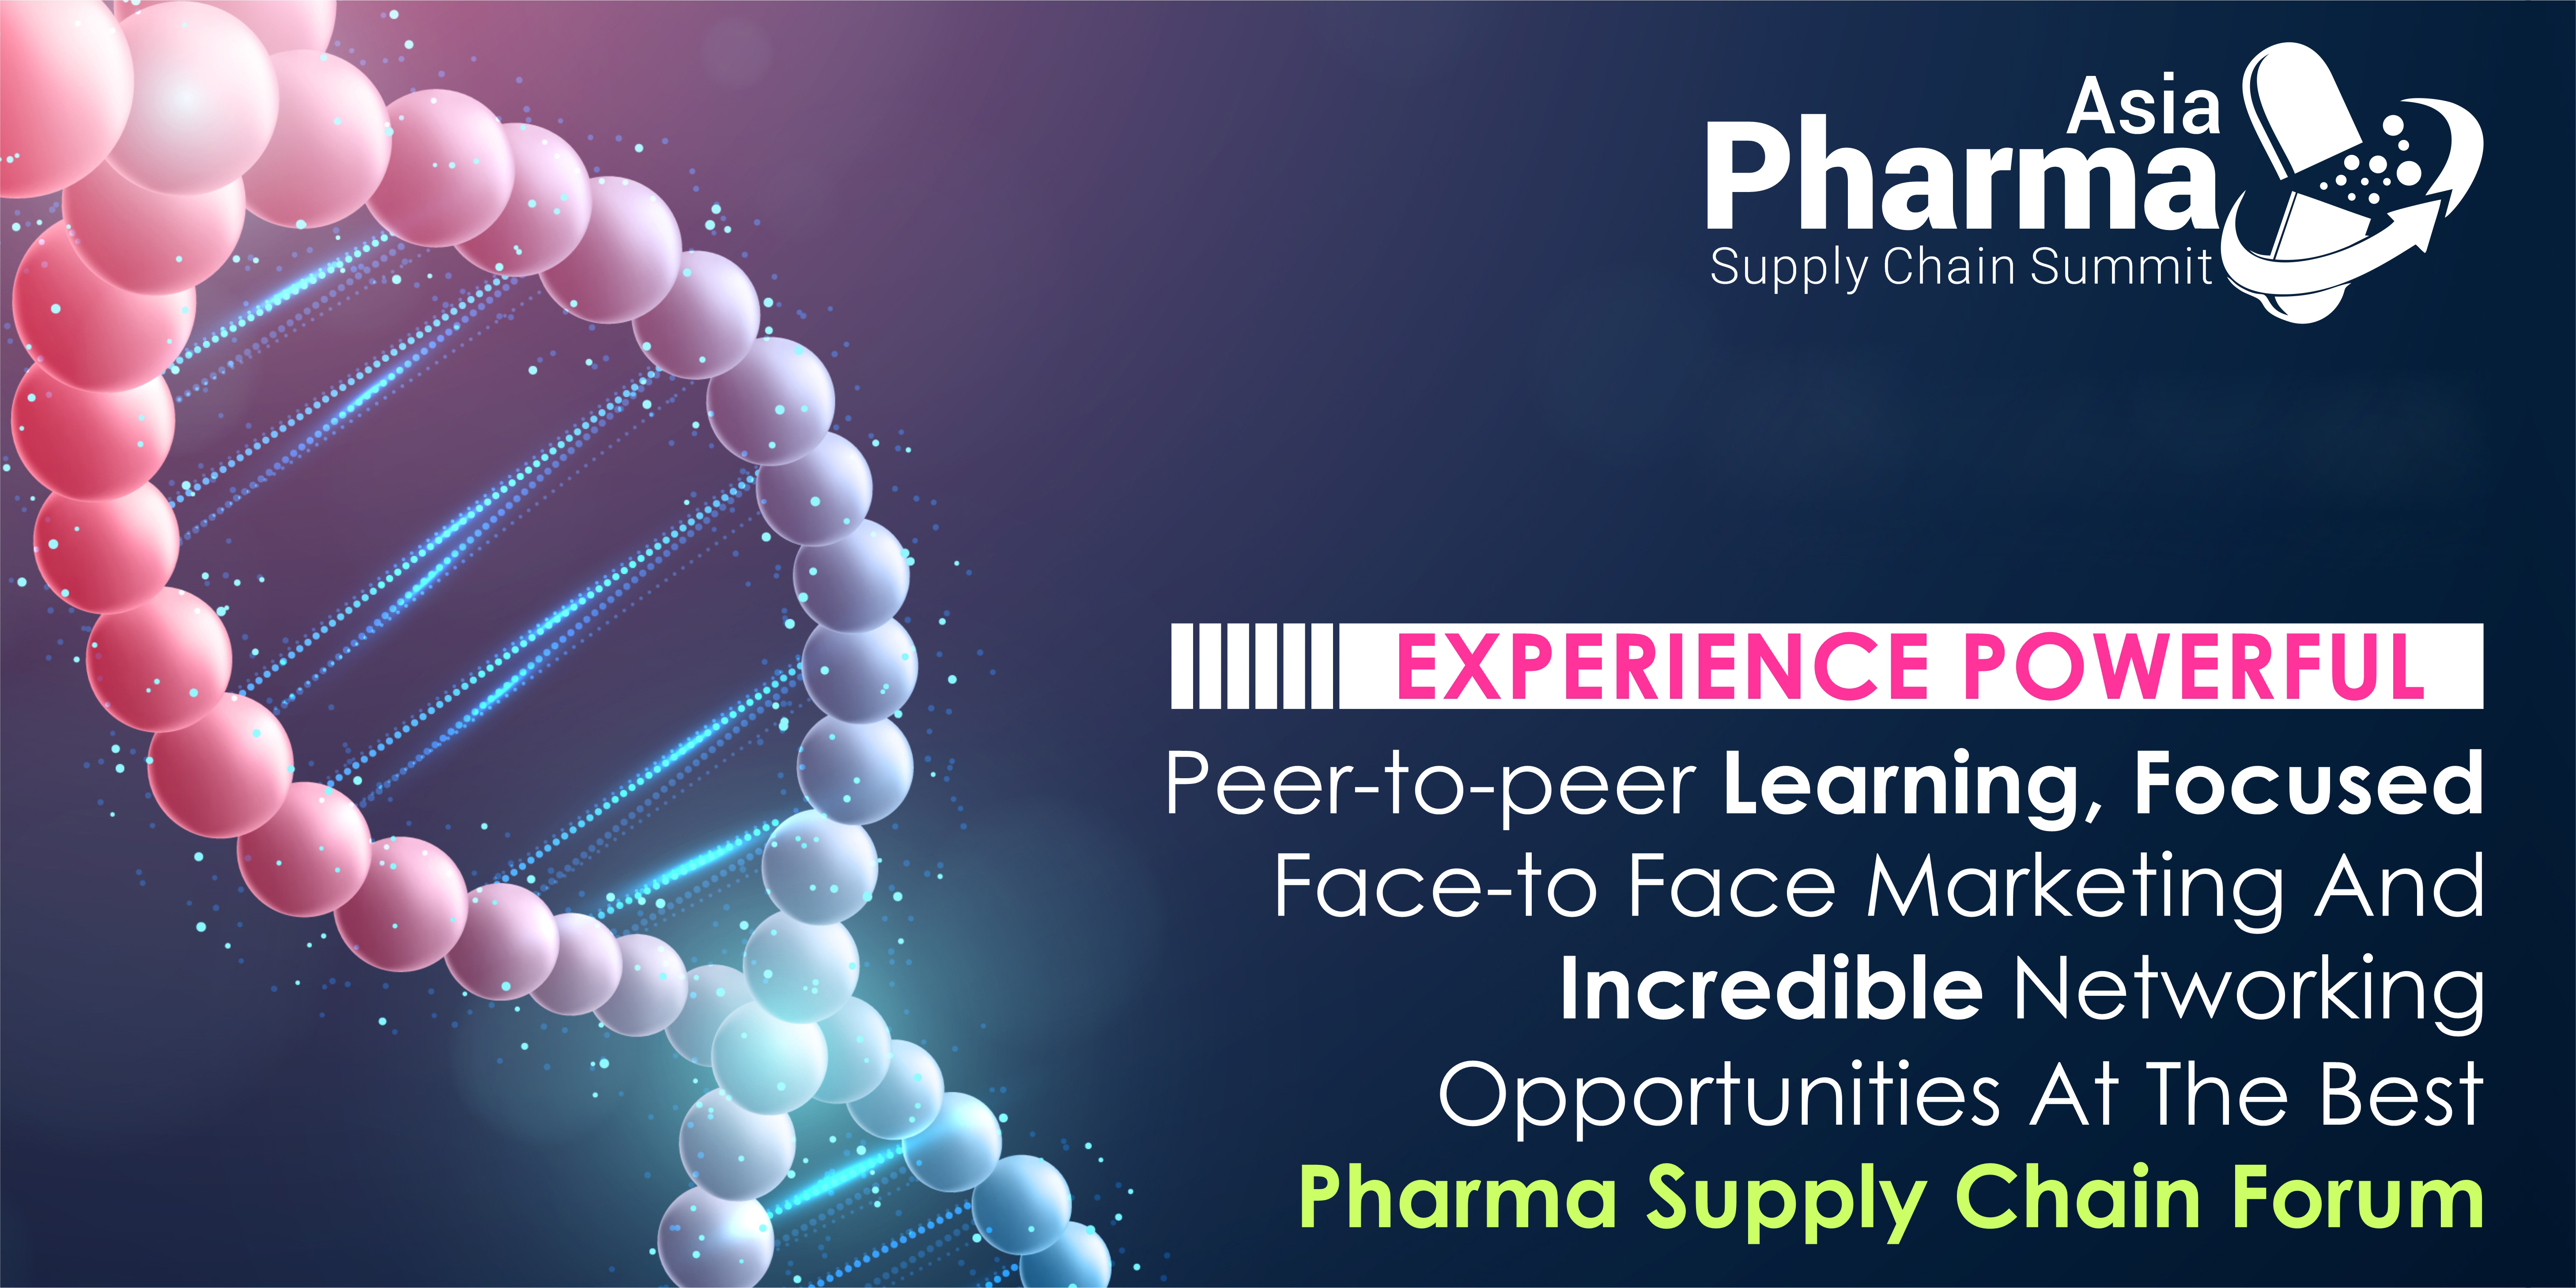 Asia Pharma Supply Chain Summit 2019